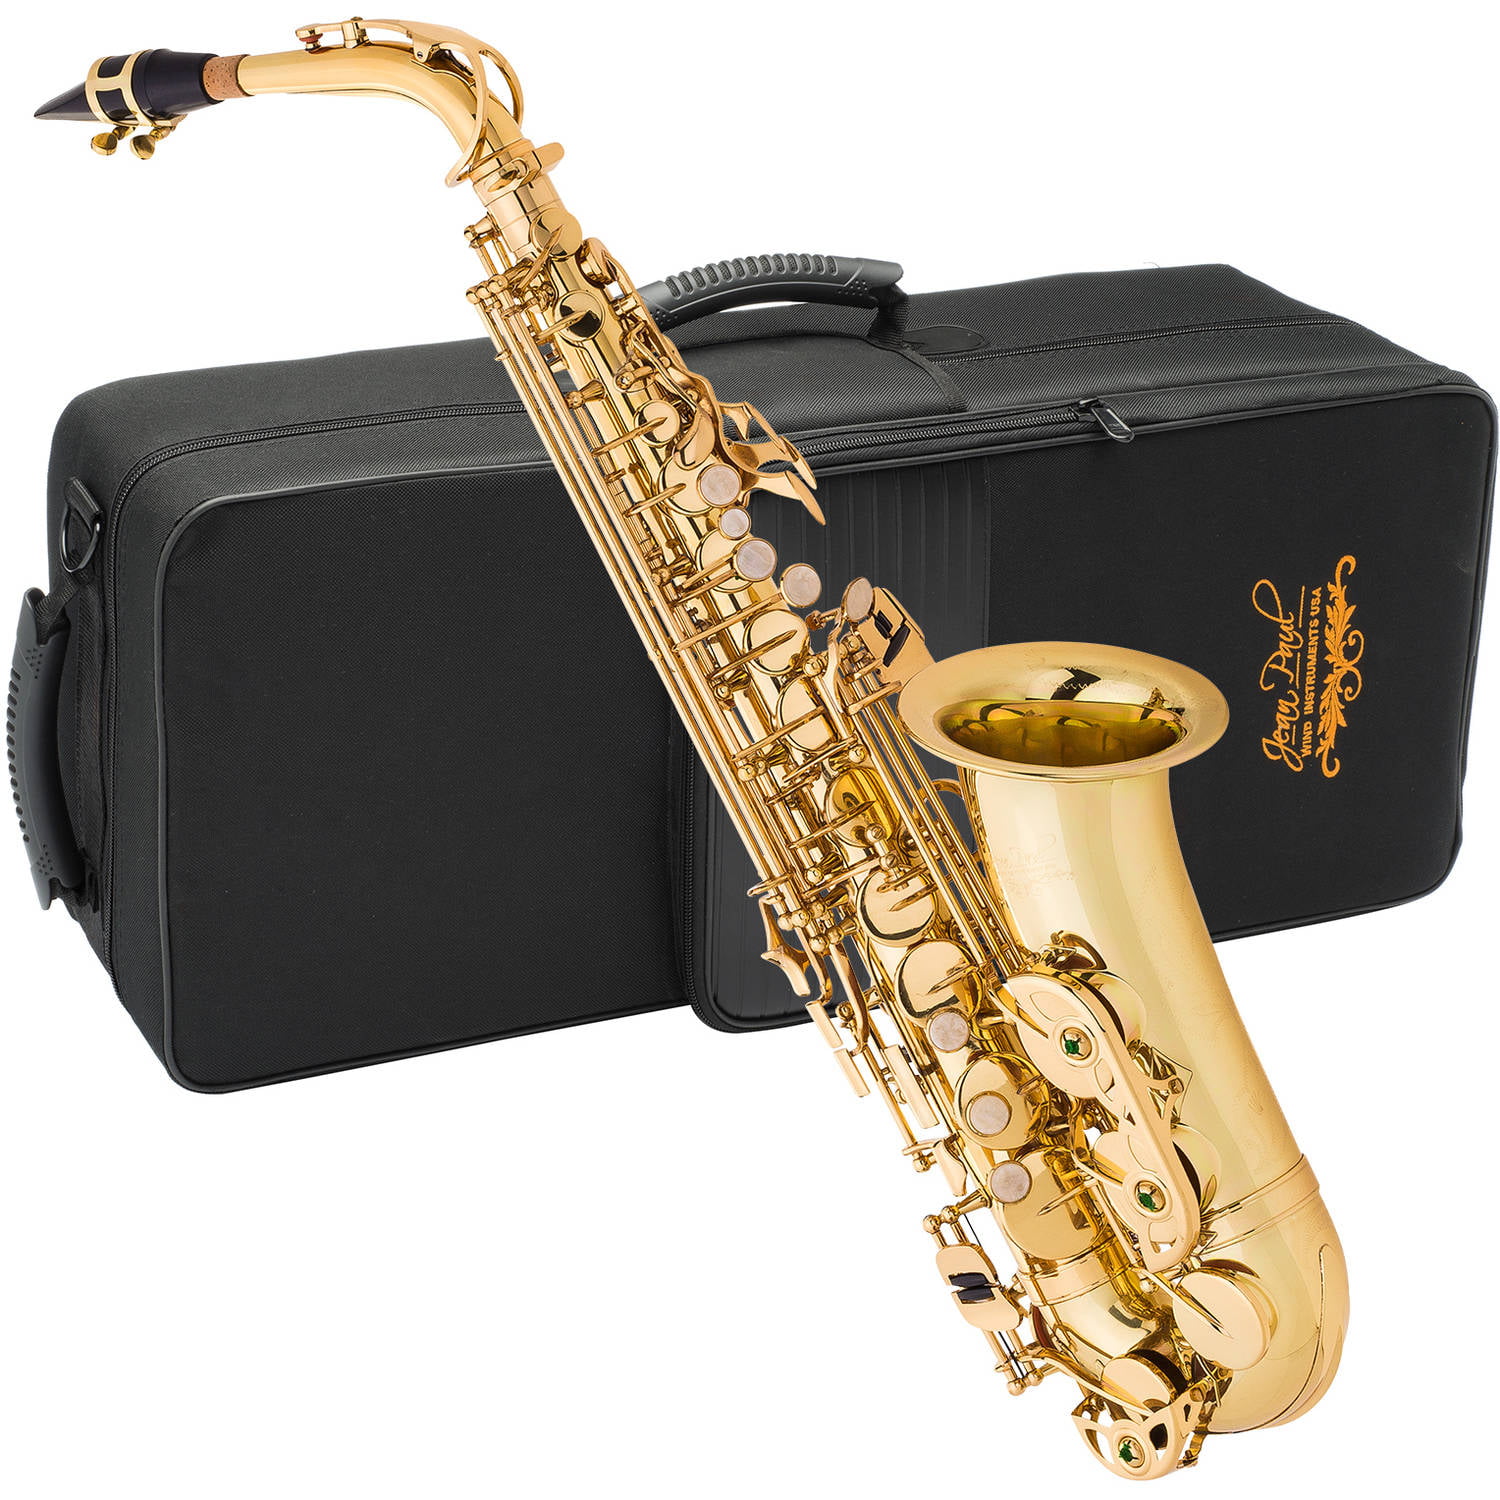 USA AS-400 Intermediate Saxophone with Case - Walmart.com